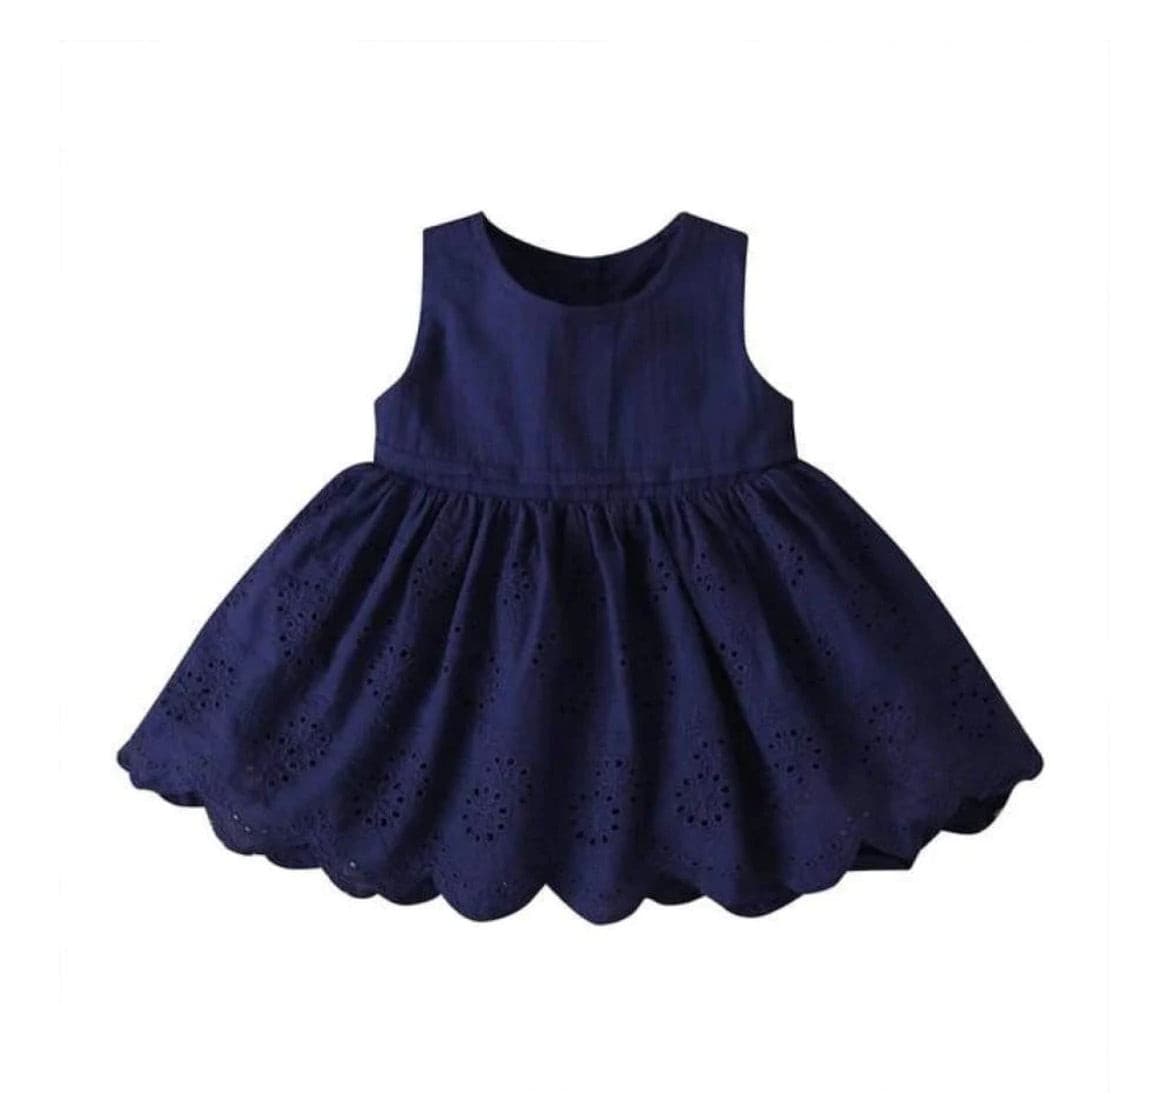 Alissa Scallop Edge Dress - Navy Blue.